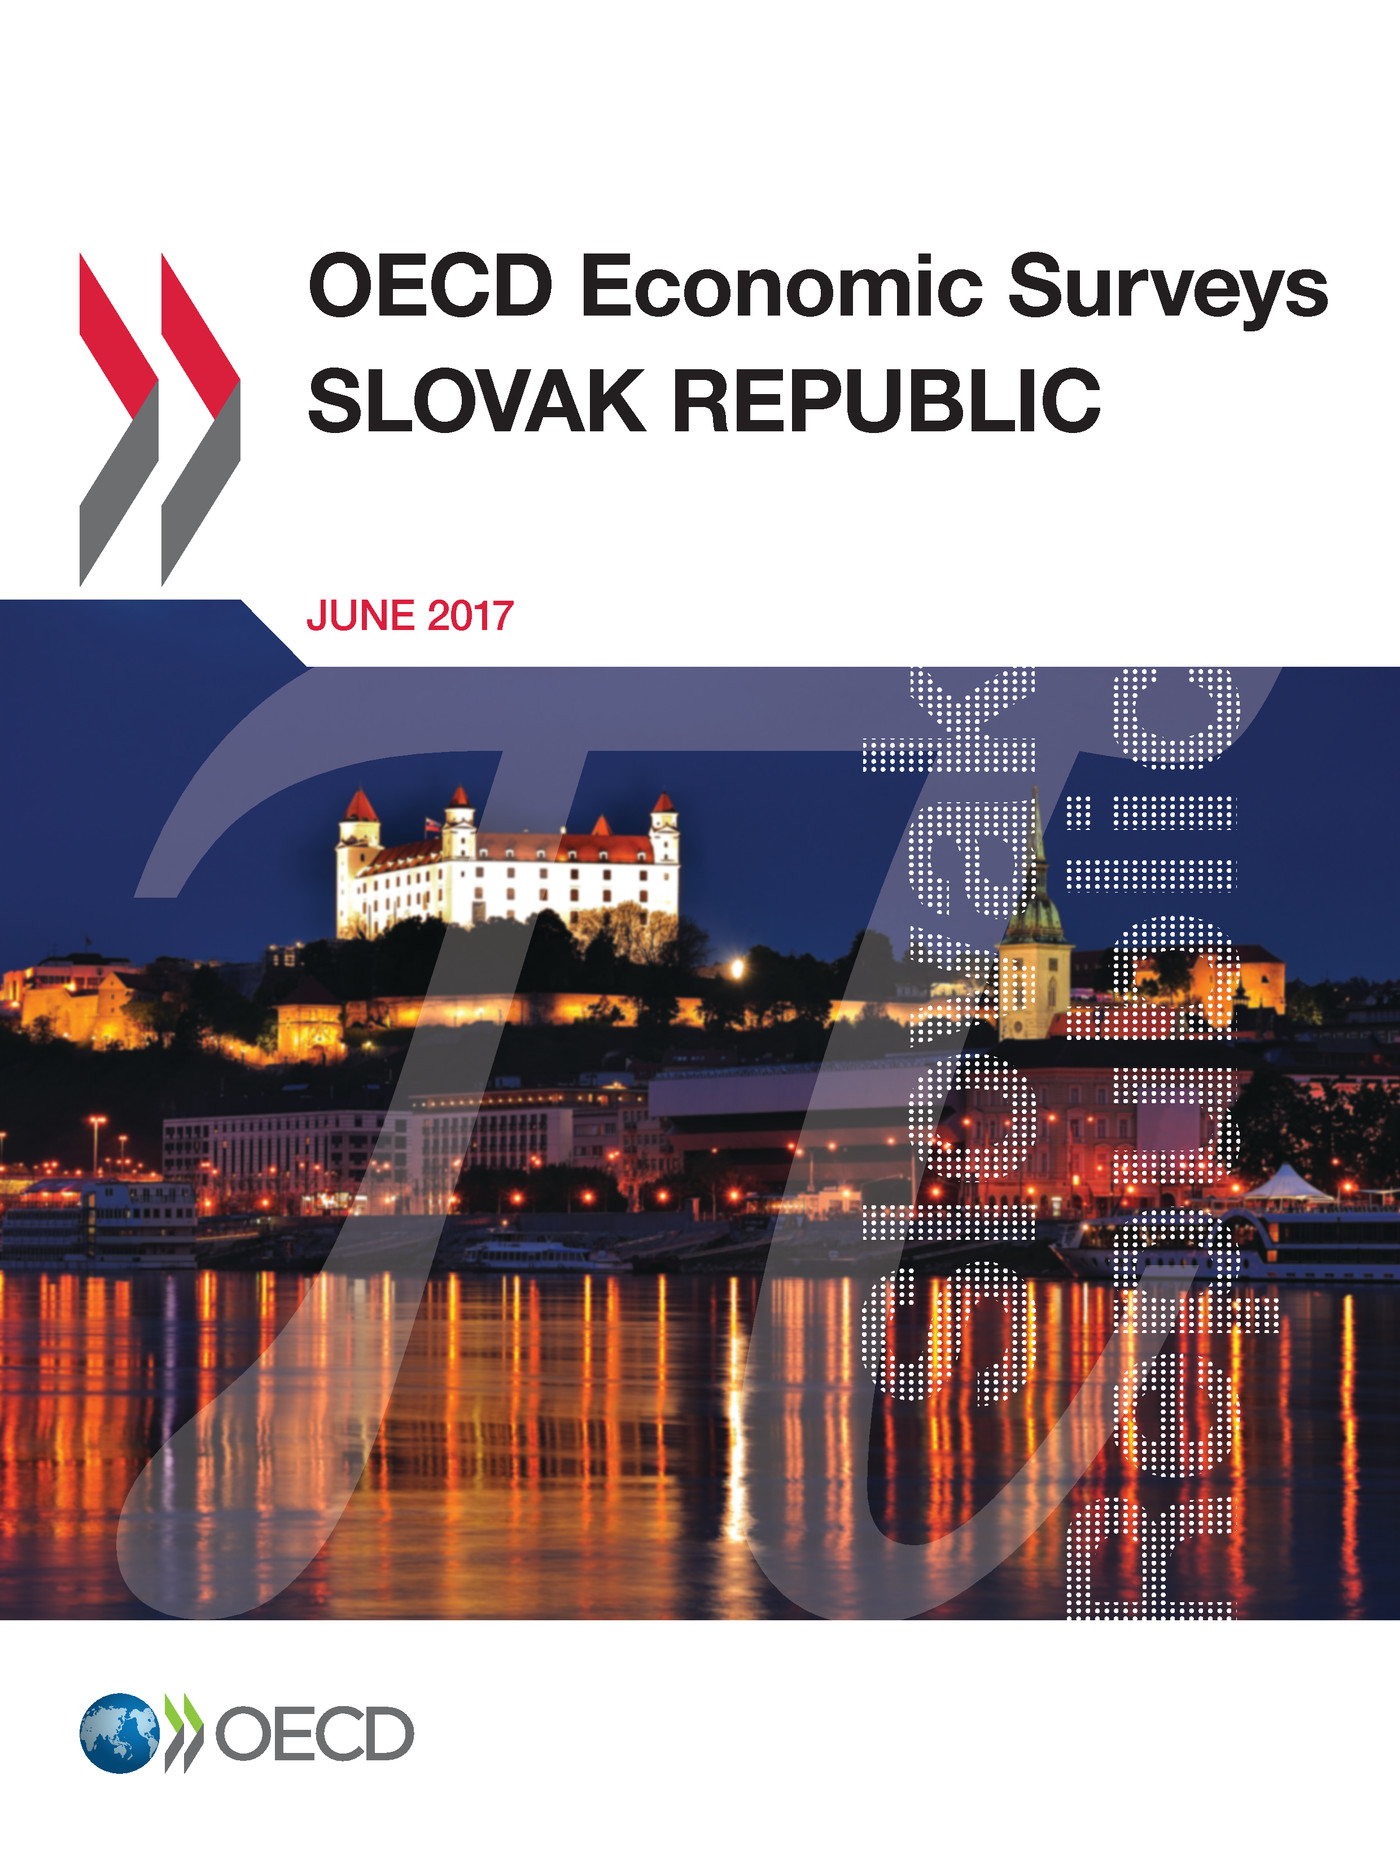 OECD Economic Surveys: Slovak Republic 2017 -  Collectif - OCDE / OECD